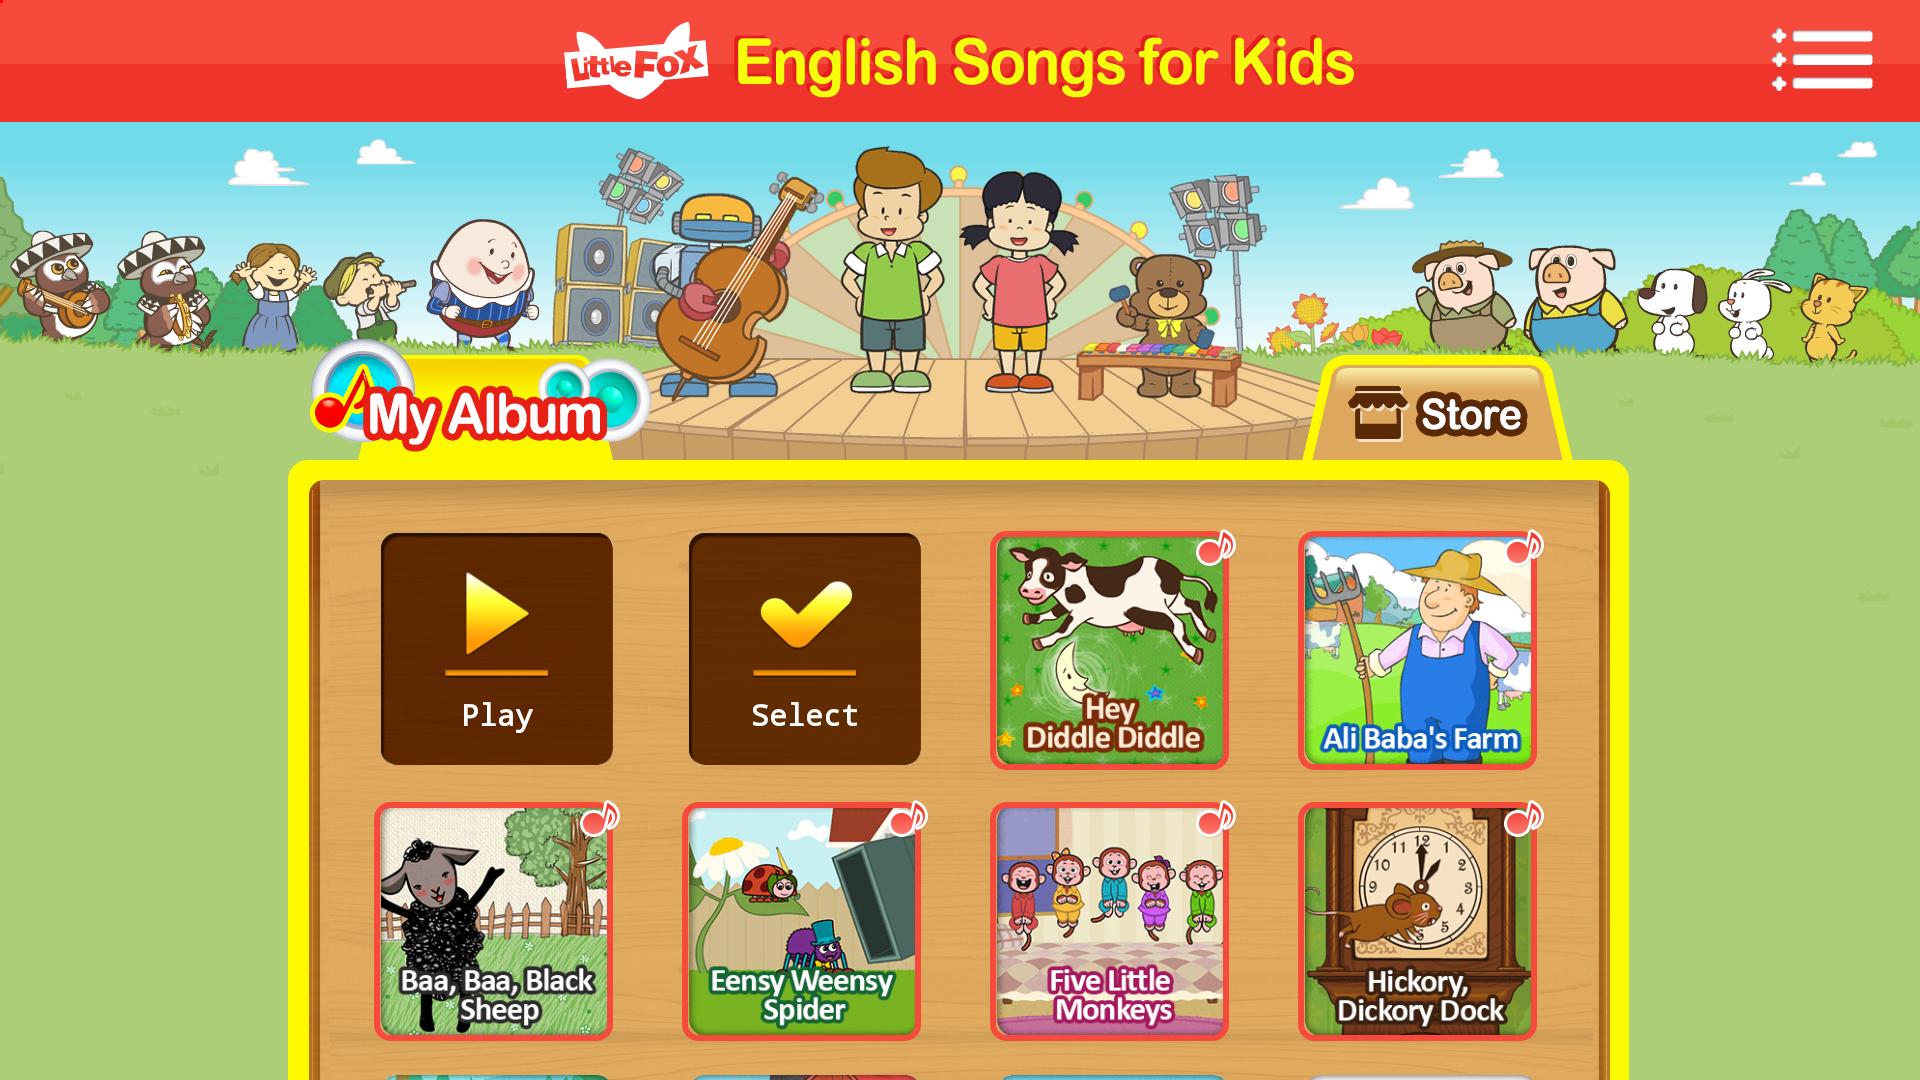 Английские песни код. Инглиш Сонг. English Songs for children. Song for Kids. English Songs for Kids сайты.